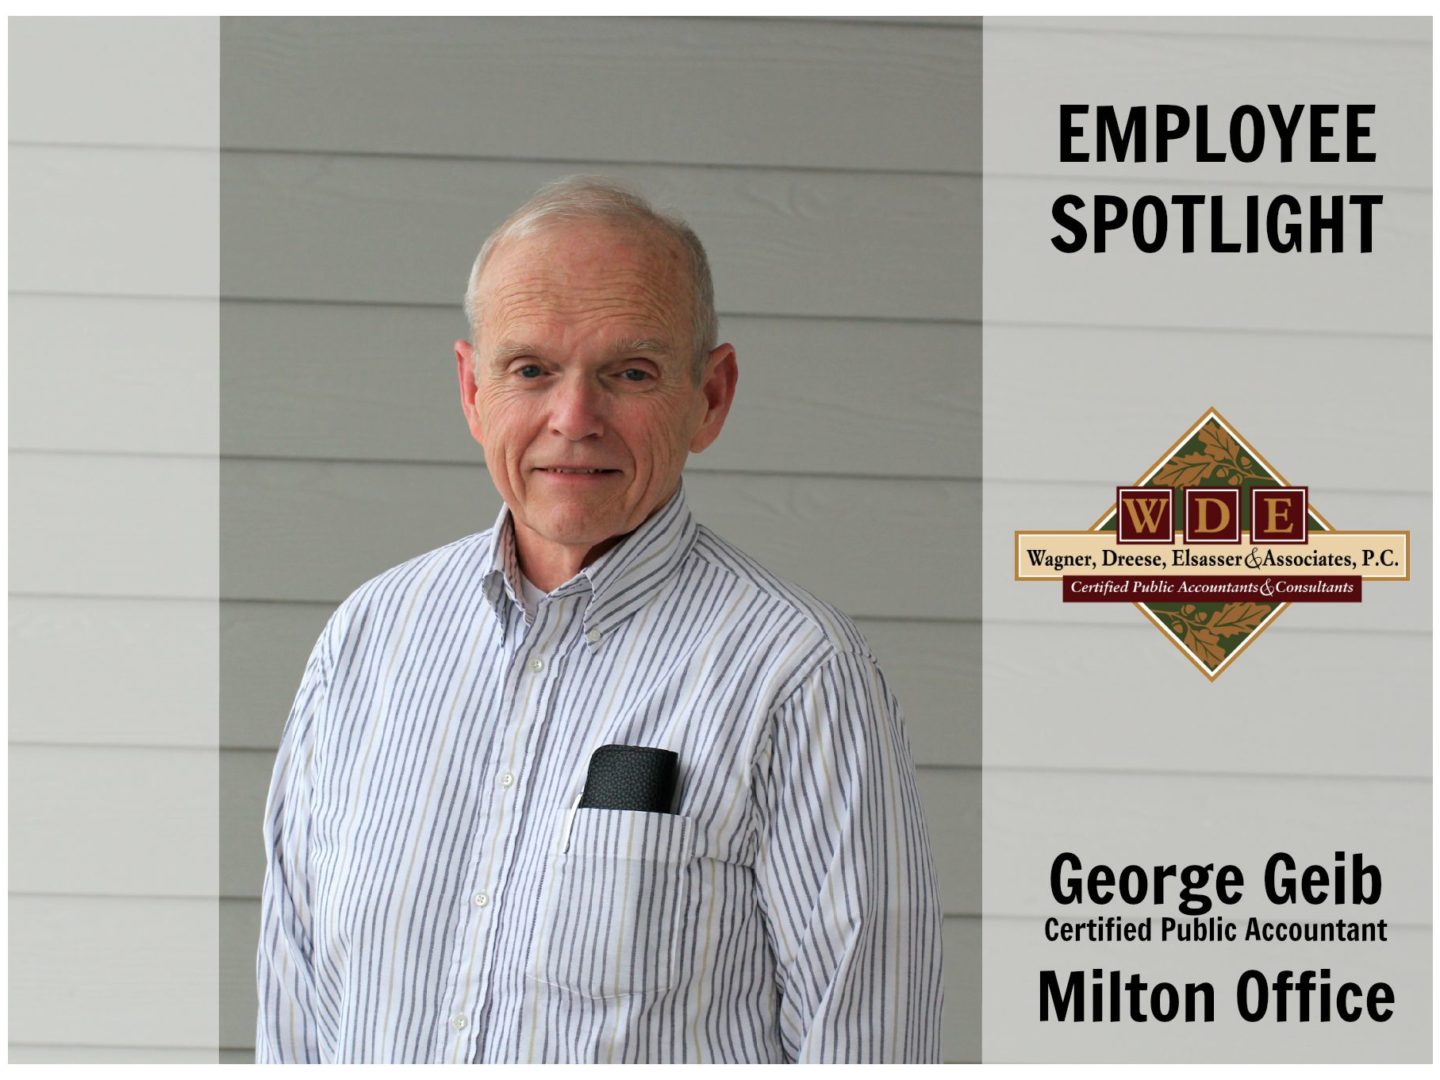 Employee Spotlight: George Geib